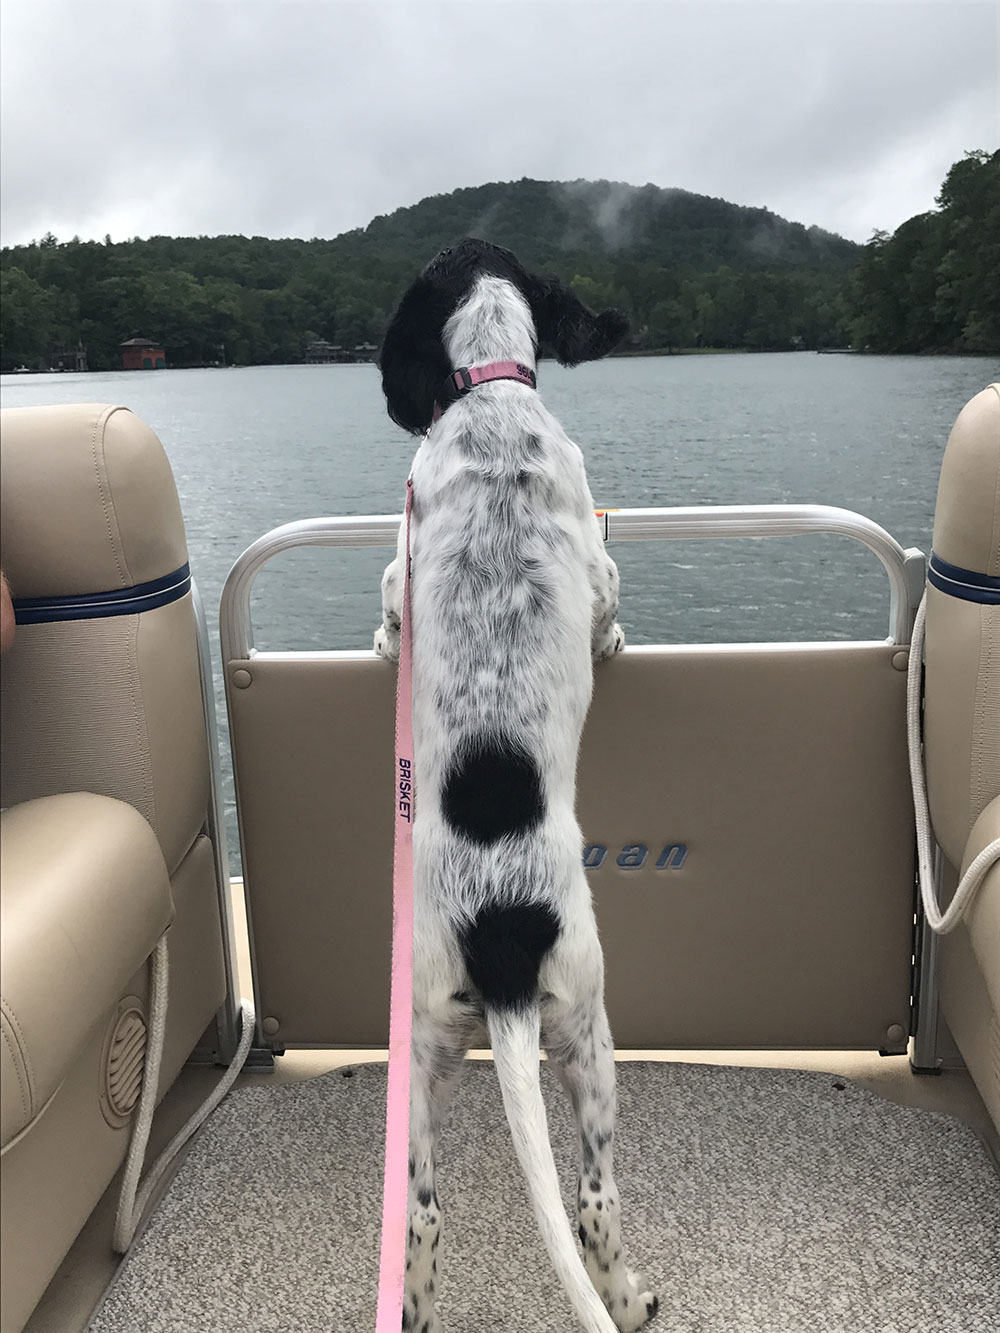 A happy dog views Lake Rabun from a ski boat